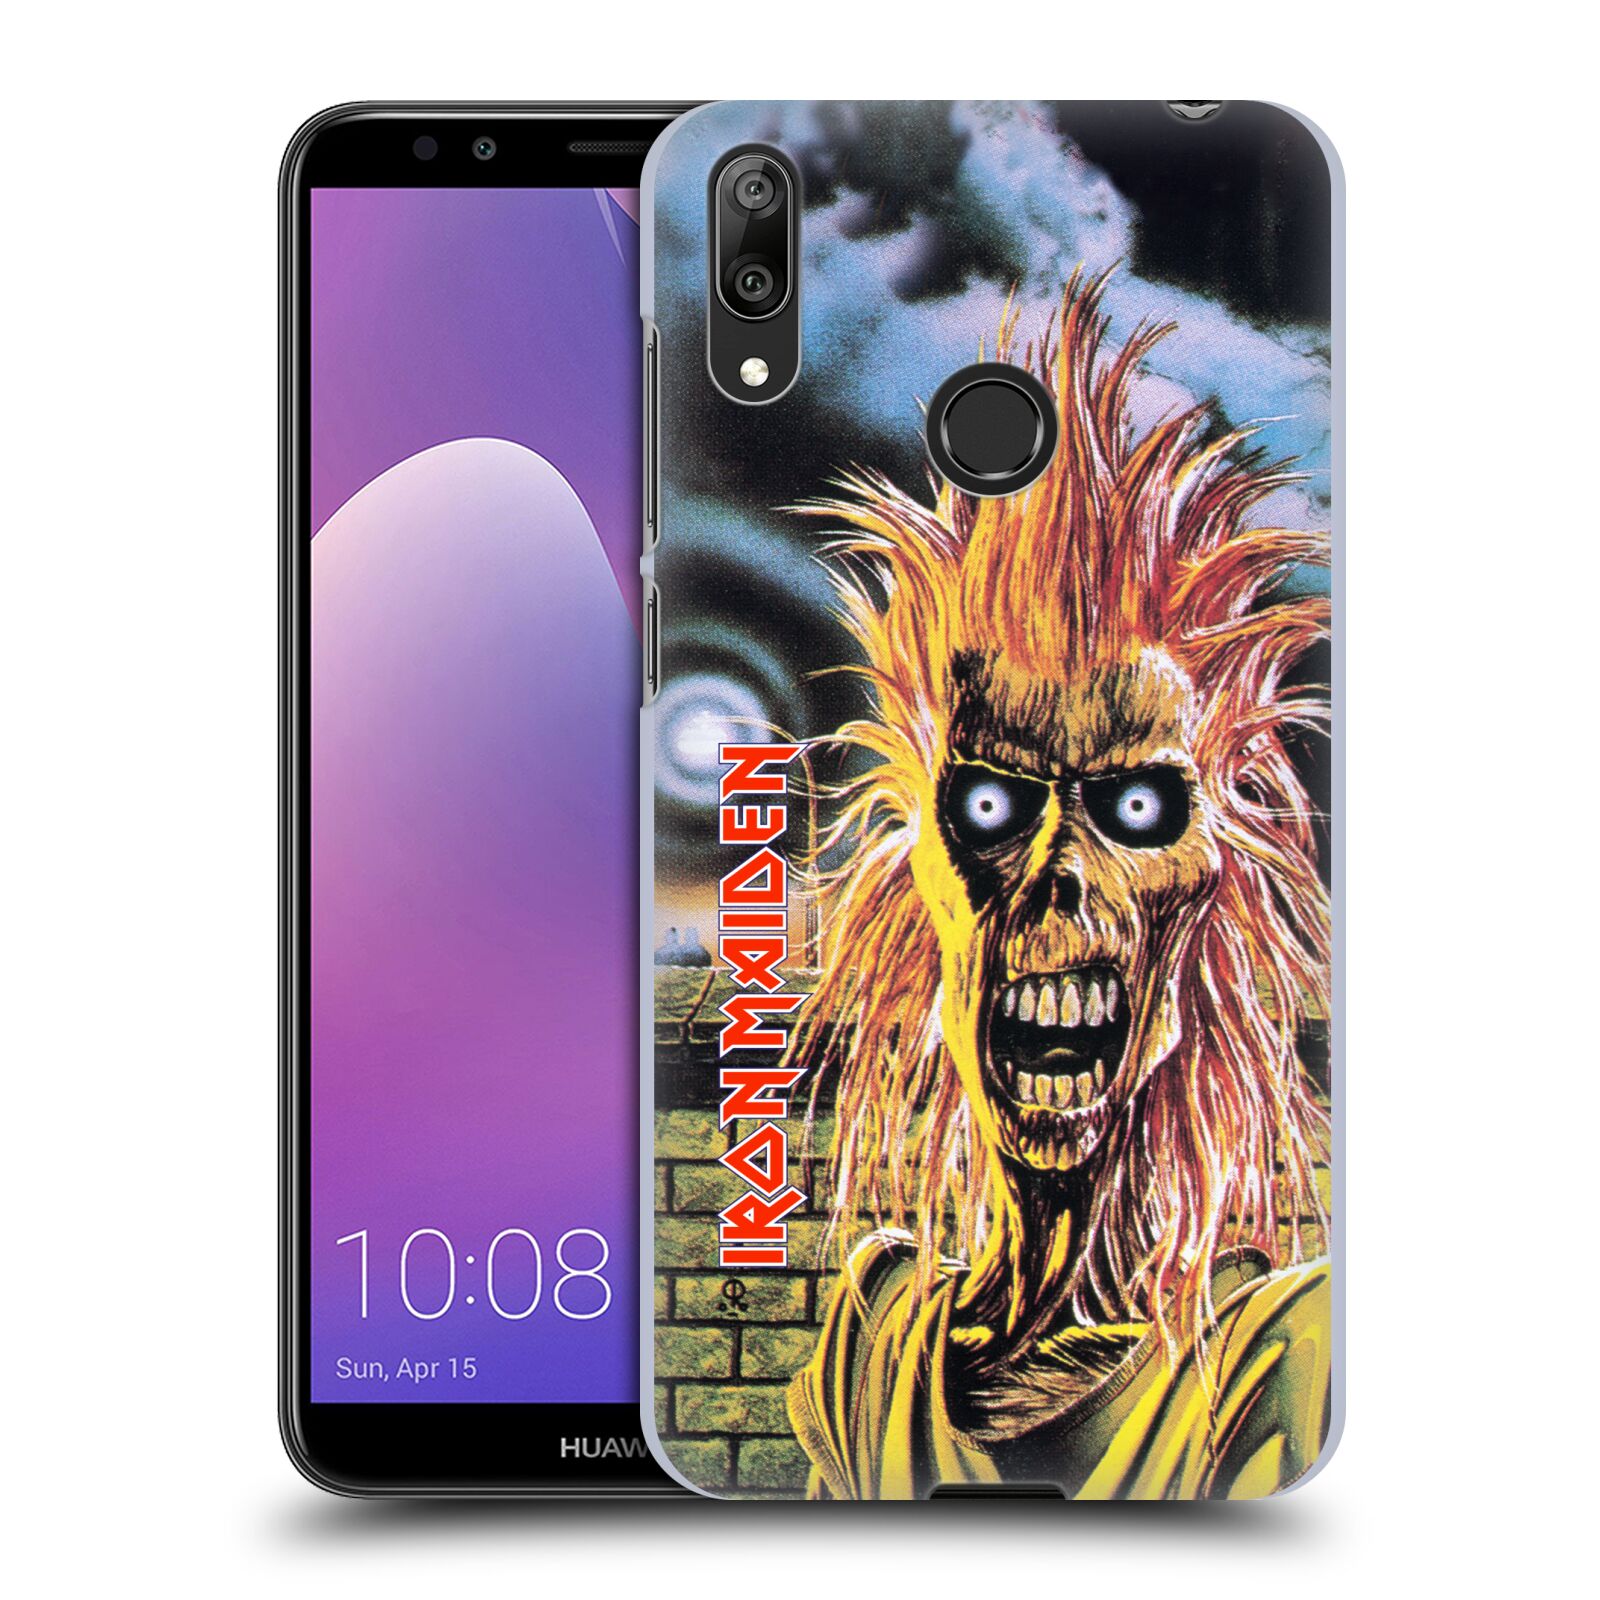 Pouzdro na mobil Huawei Y7 2019 - Head Case - Heavymetalová skupina Iron Maiden punker